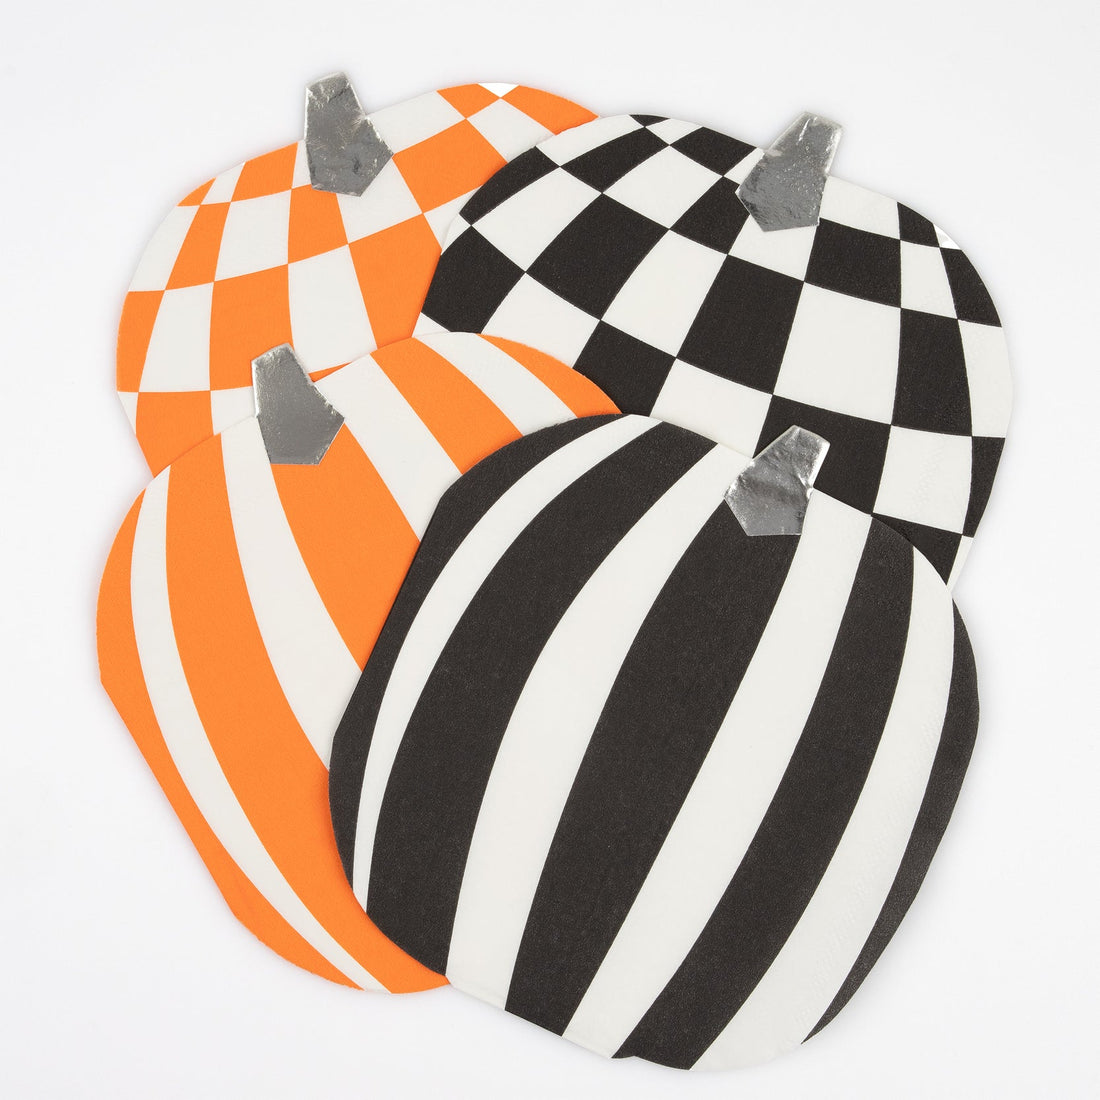 Four Mod Pumpkin Napkins, one orange and white check, one black and white check, one orange and white stripe, one black and white stripe